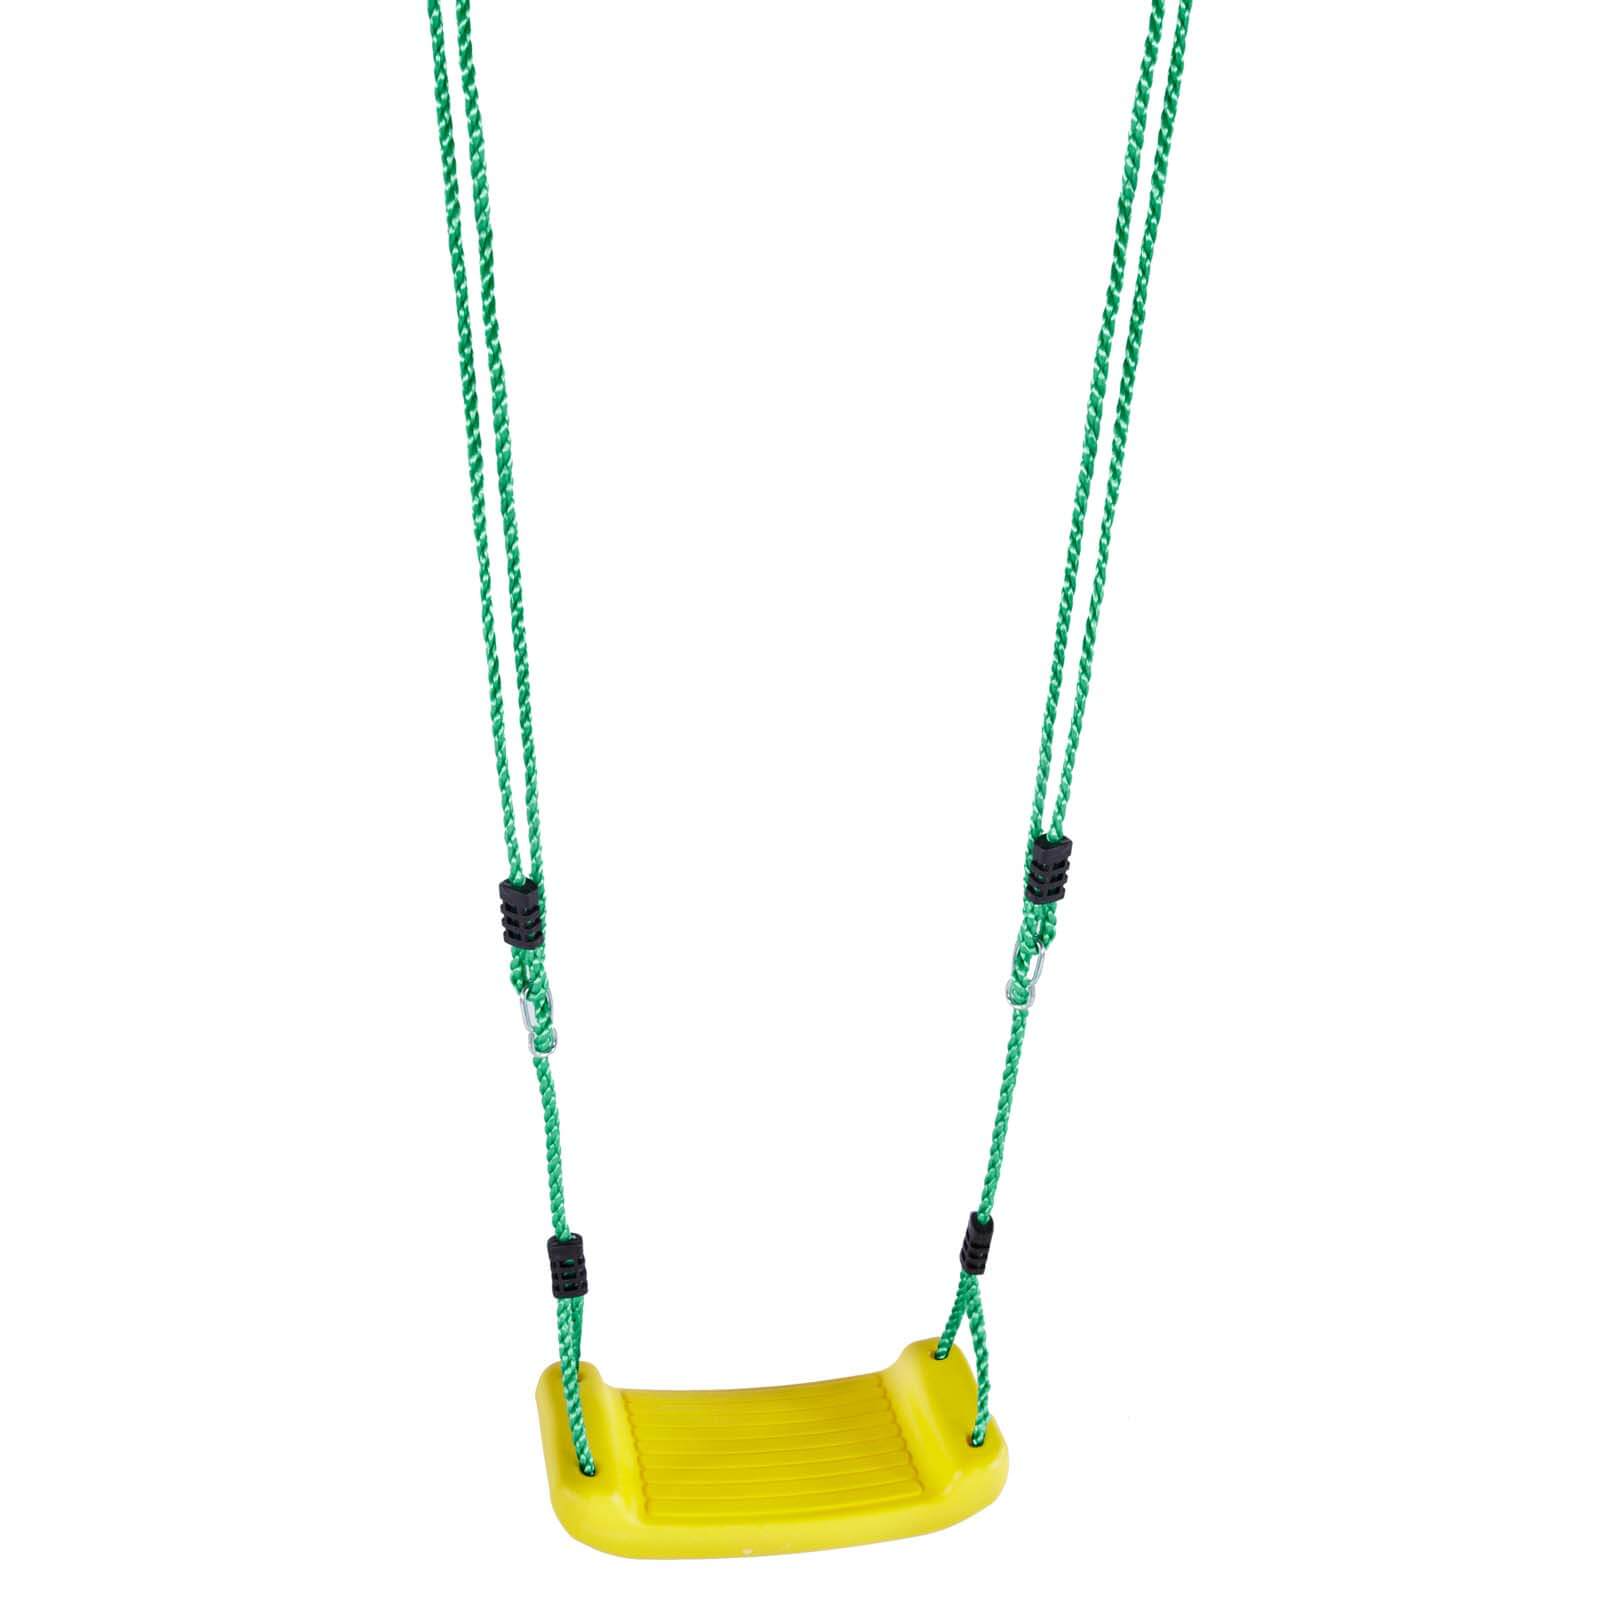 Plum Swing Seat - Yellow